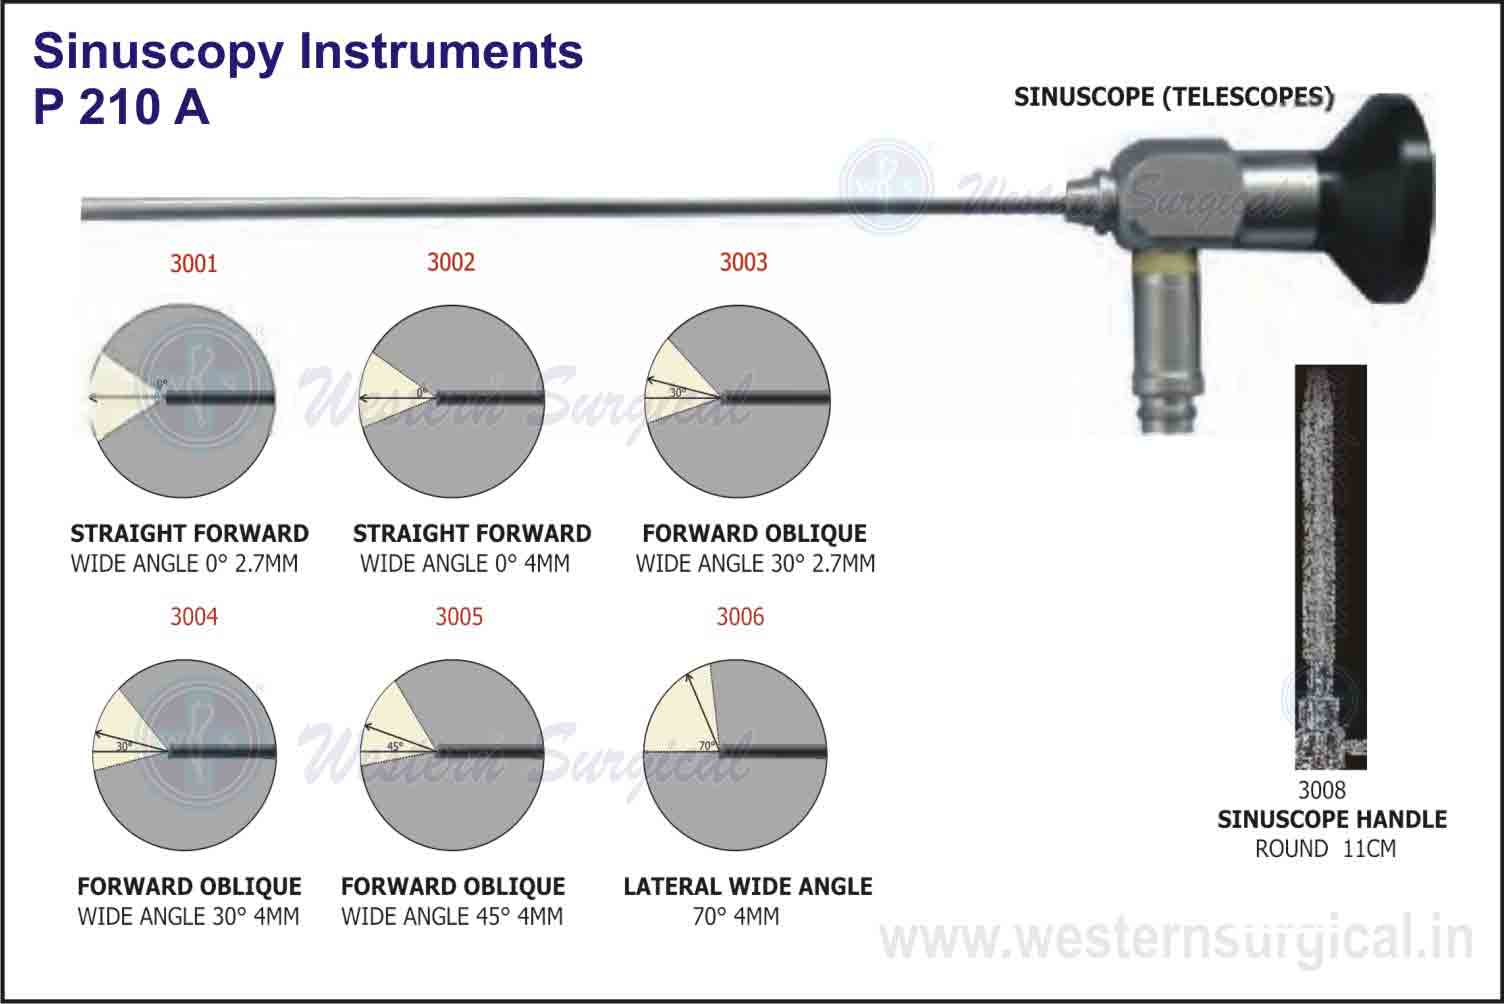 SINUSCOPE (TELESCOPES), SINUSCOPE HANDLE ROUND 11CM